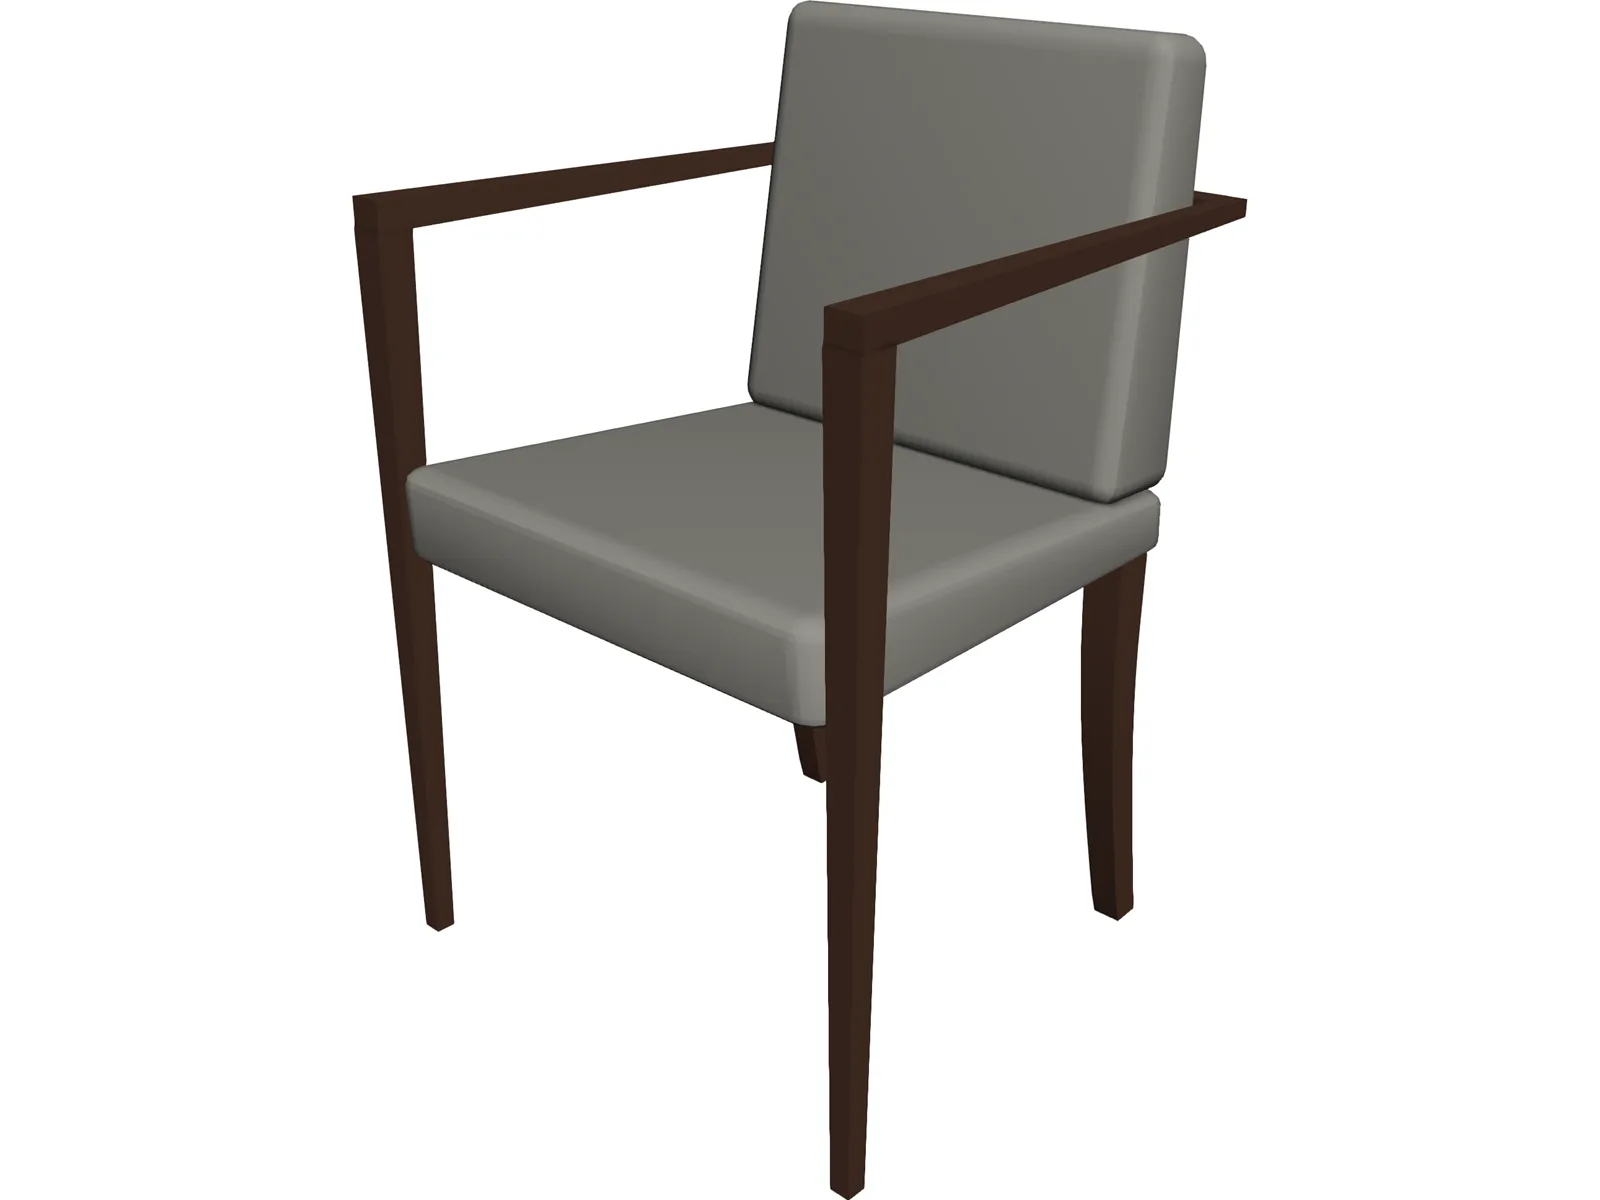 Chair Frenchline 3D Model